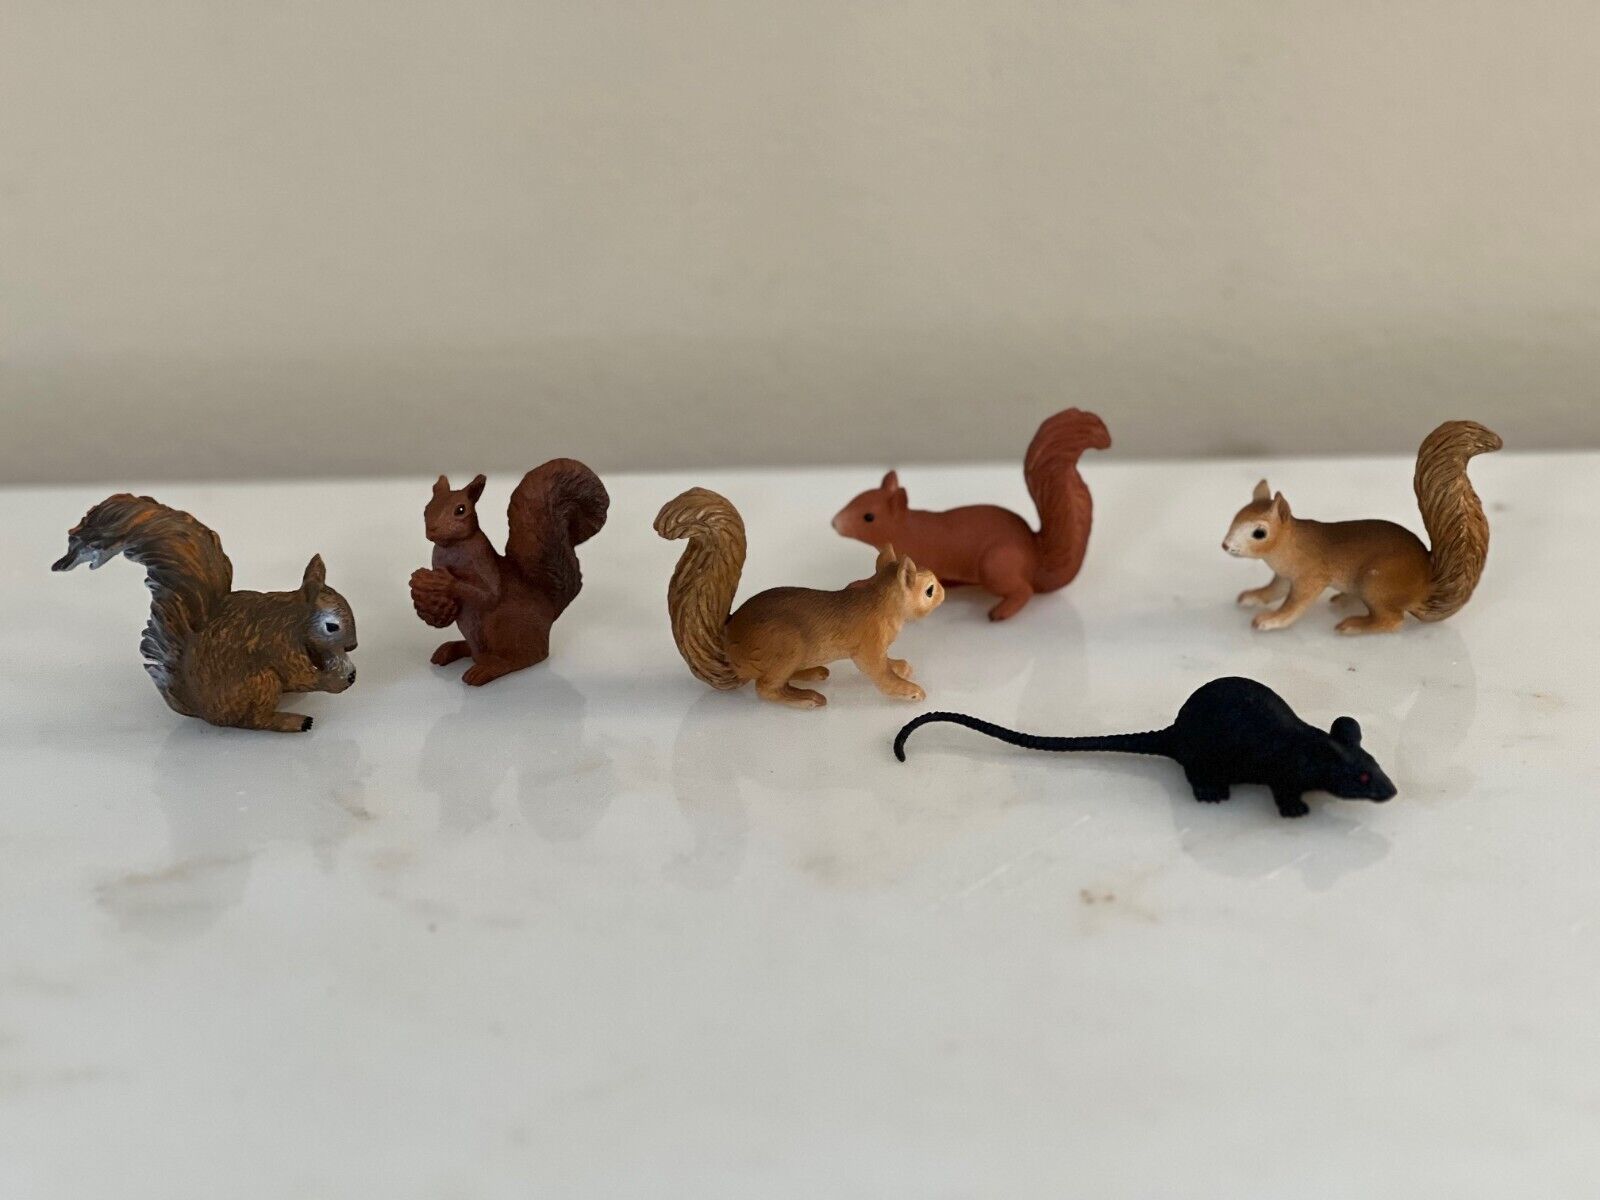 LOT of 1/6 Scale Squirrels, Rat by Schleich, Papo, Safari Ltd. etc. for Diorama